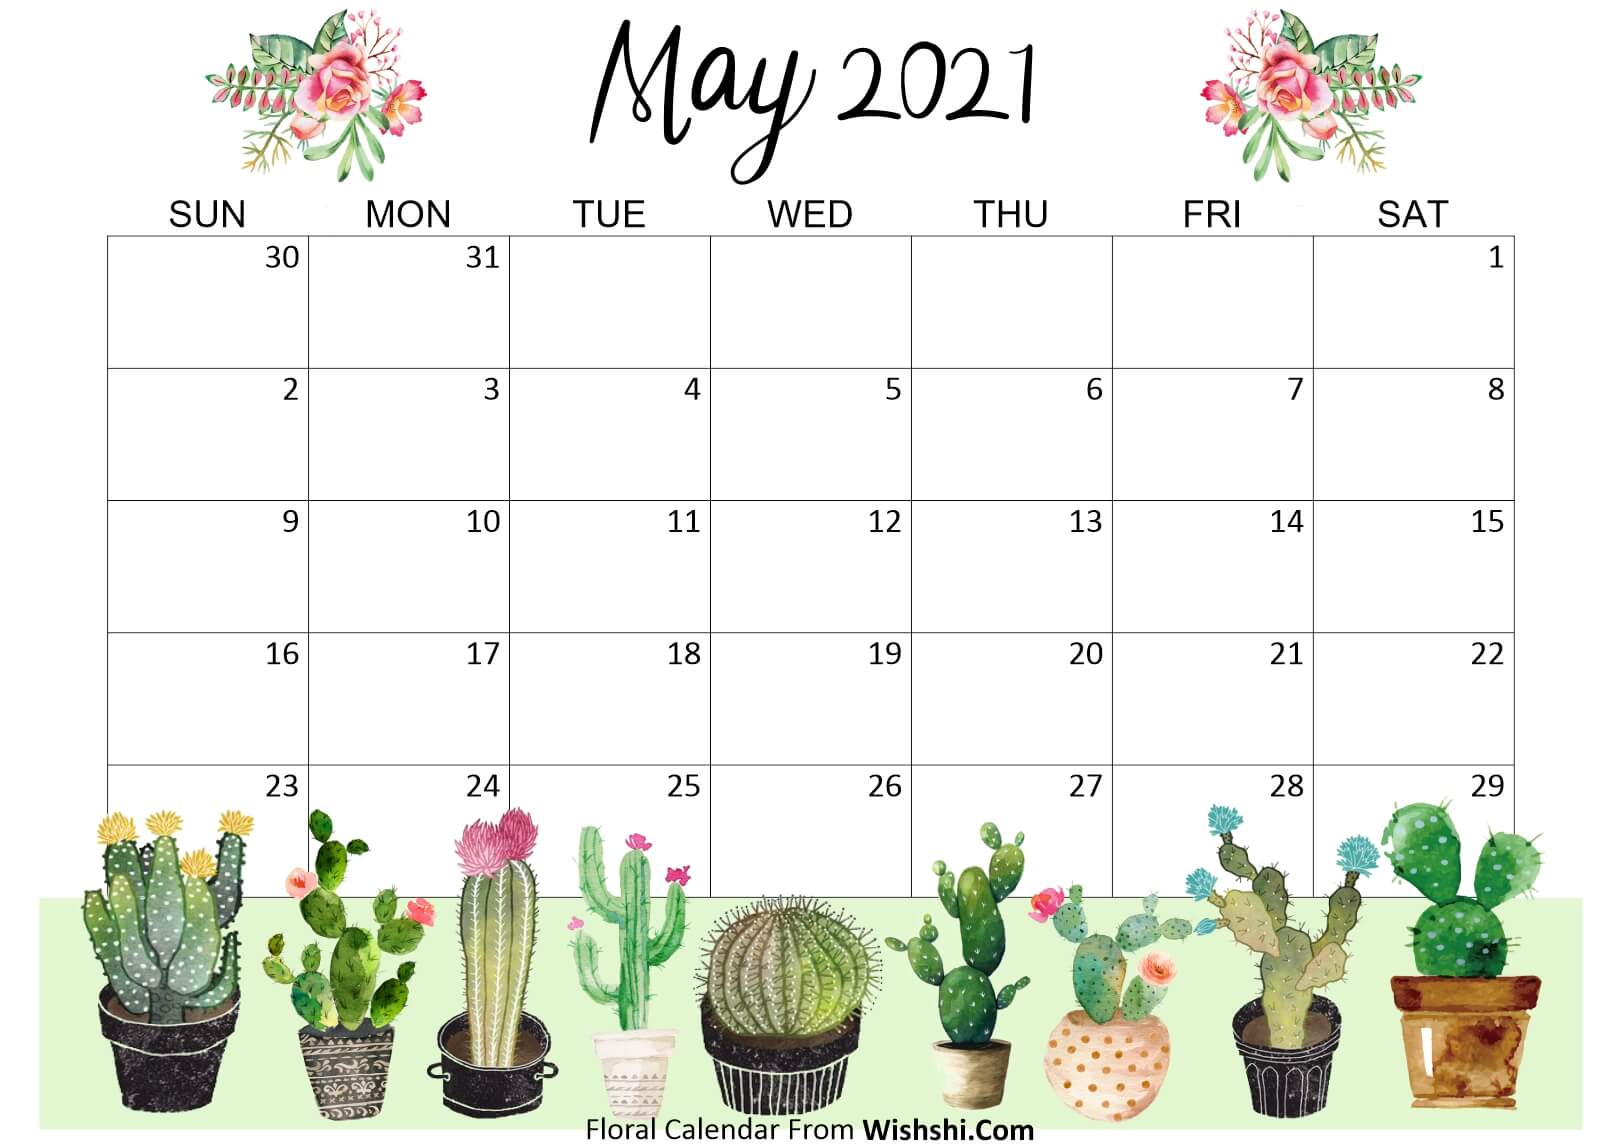 May 2021 Calendar Wallpaper Free May 2021 Calendar Background